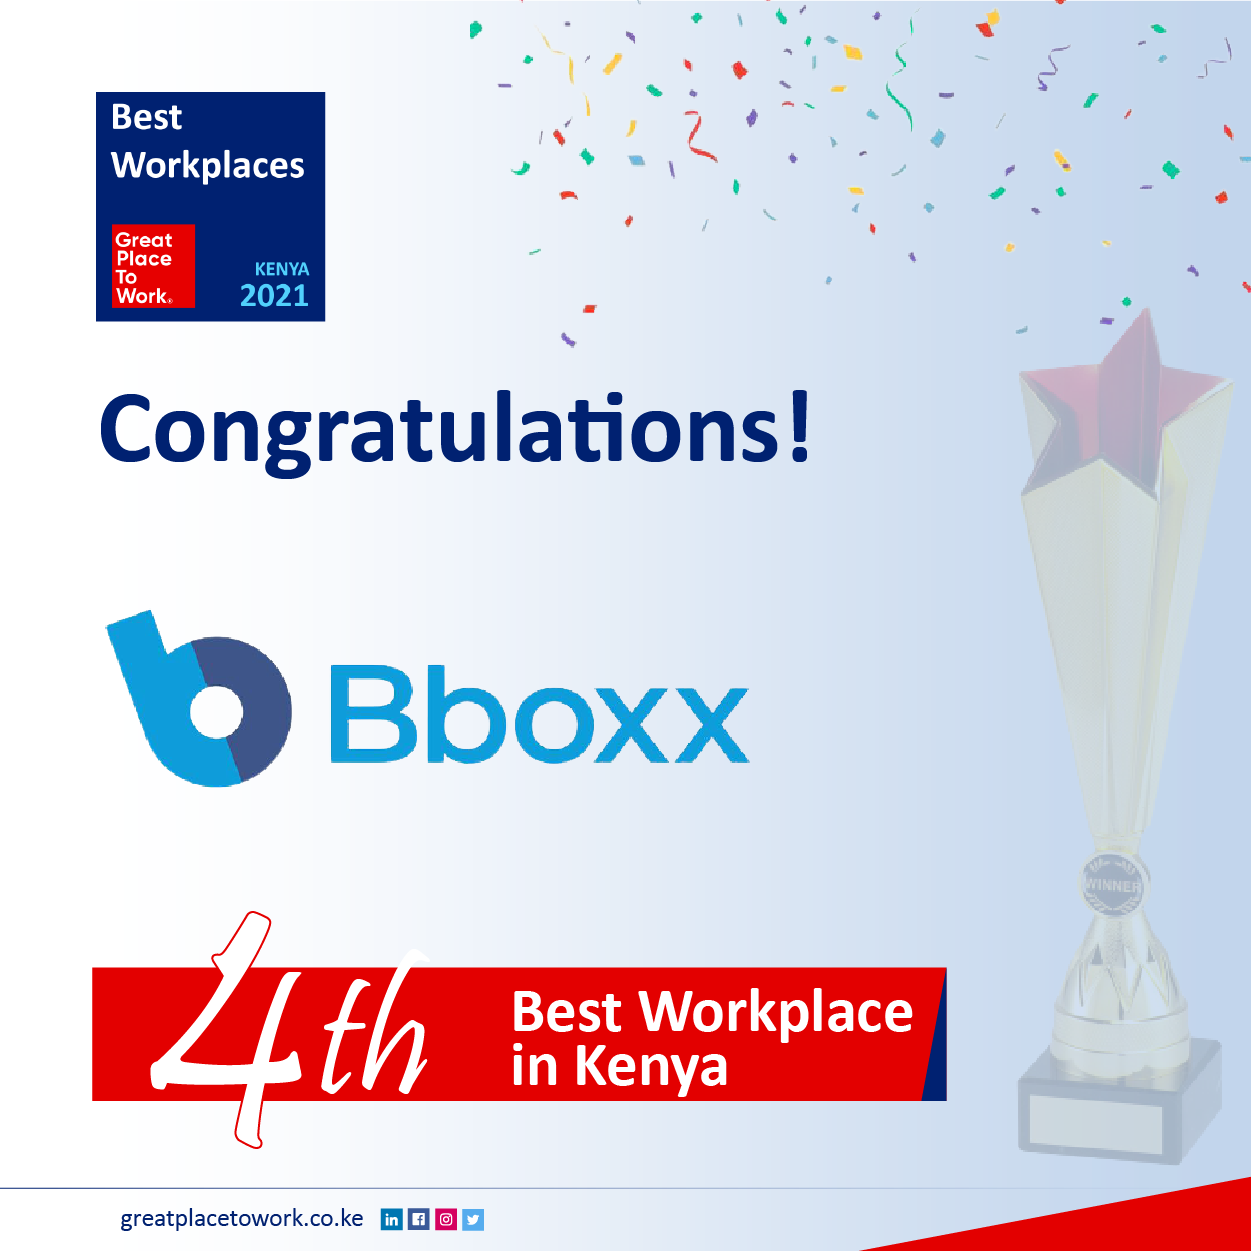  Bboxx Kenya emerges 4th Best Workplace in Kenya 2021